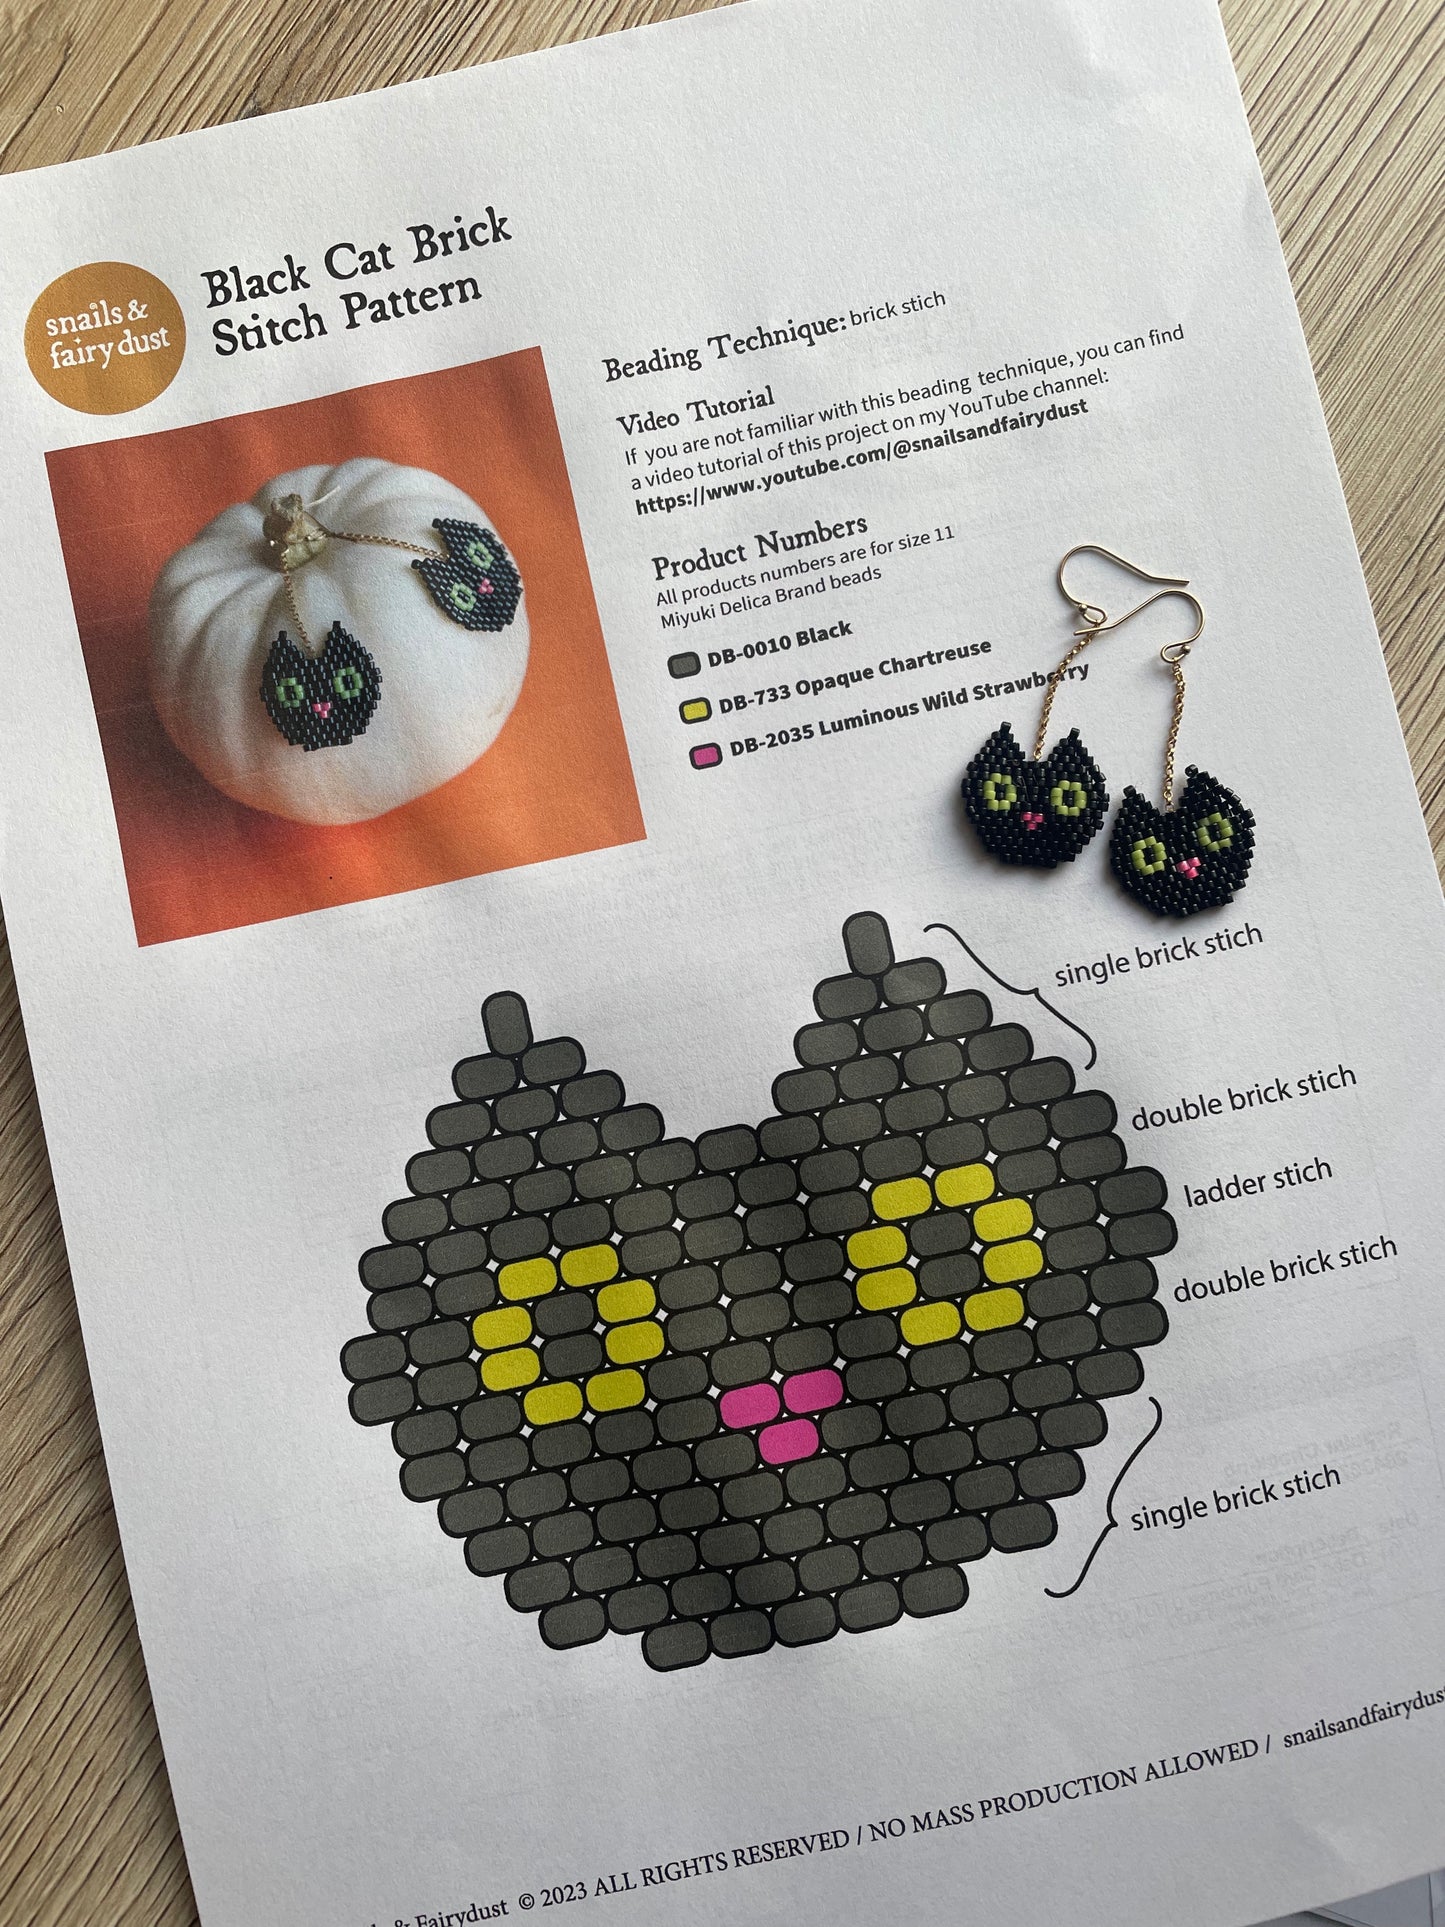 Black Cat Brick Stitch Pattern - FREE instant download